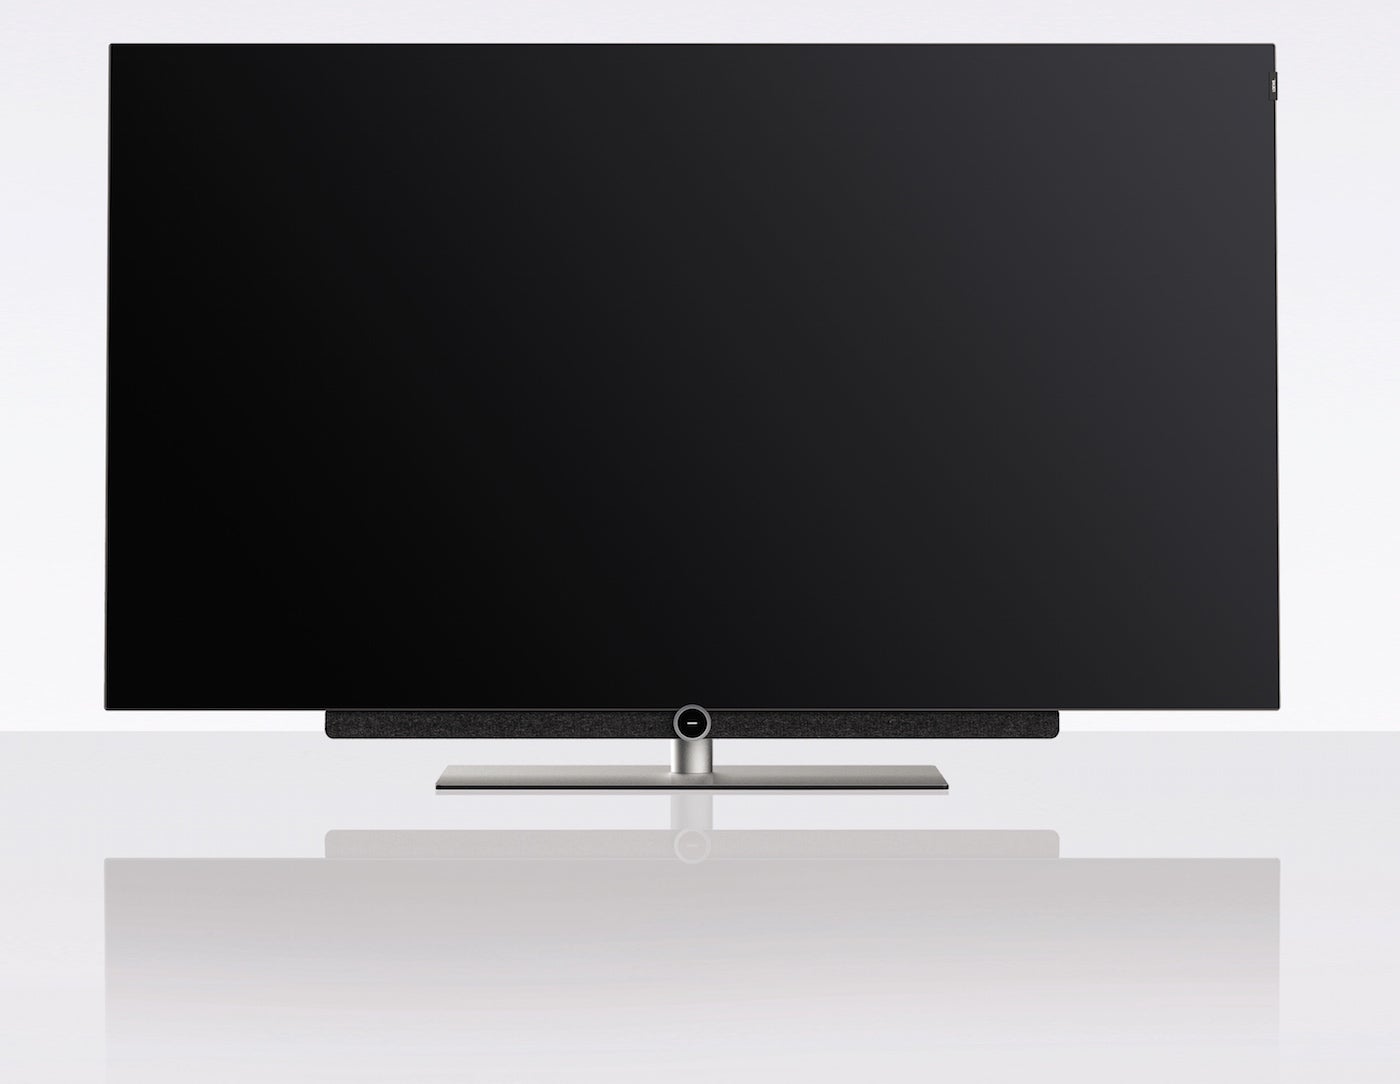 loewe 65 inch tv